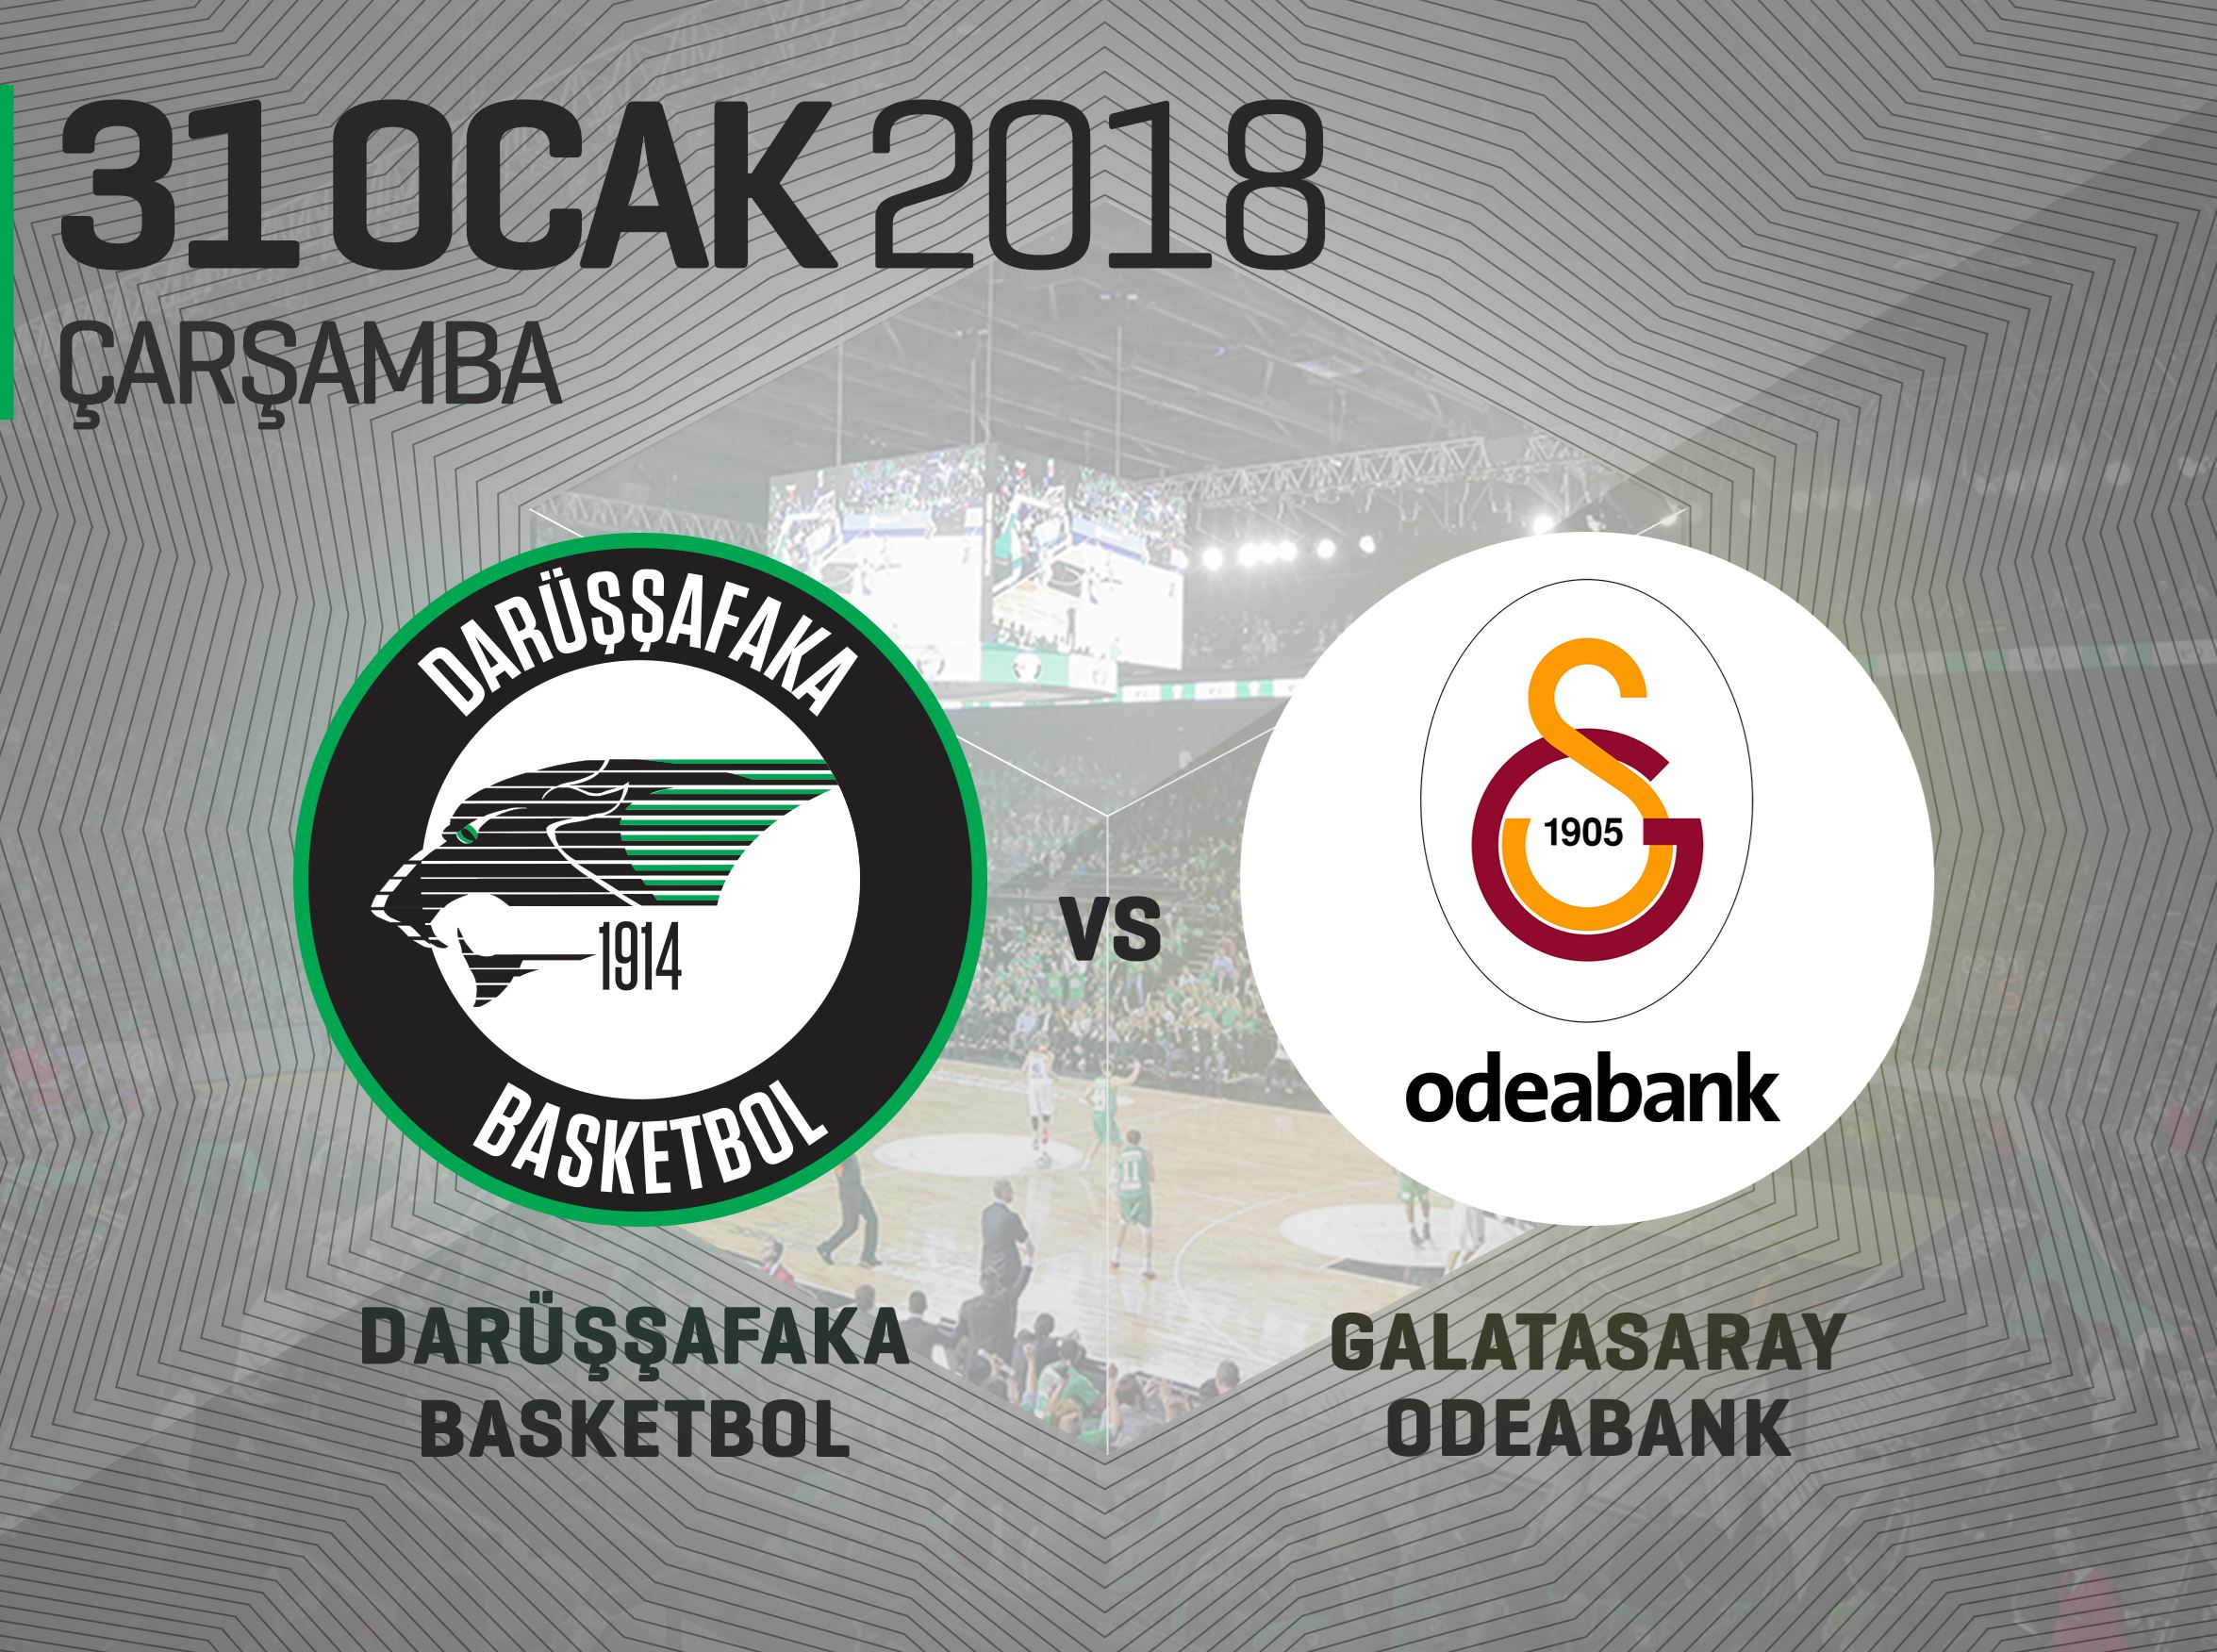 Darüşşafaka Basketbol – Galatasaray Odeabank 7Days Euro Cup